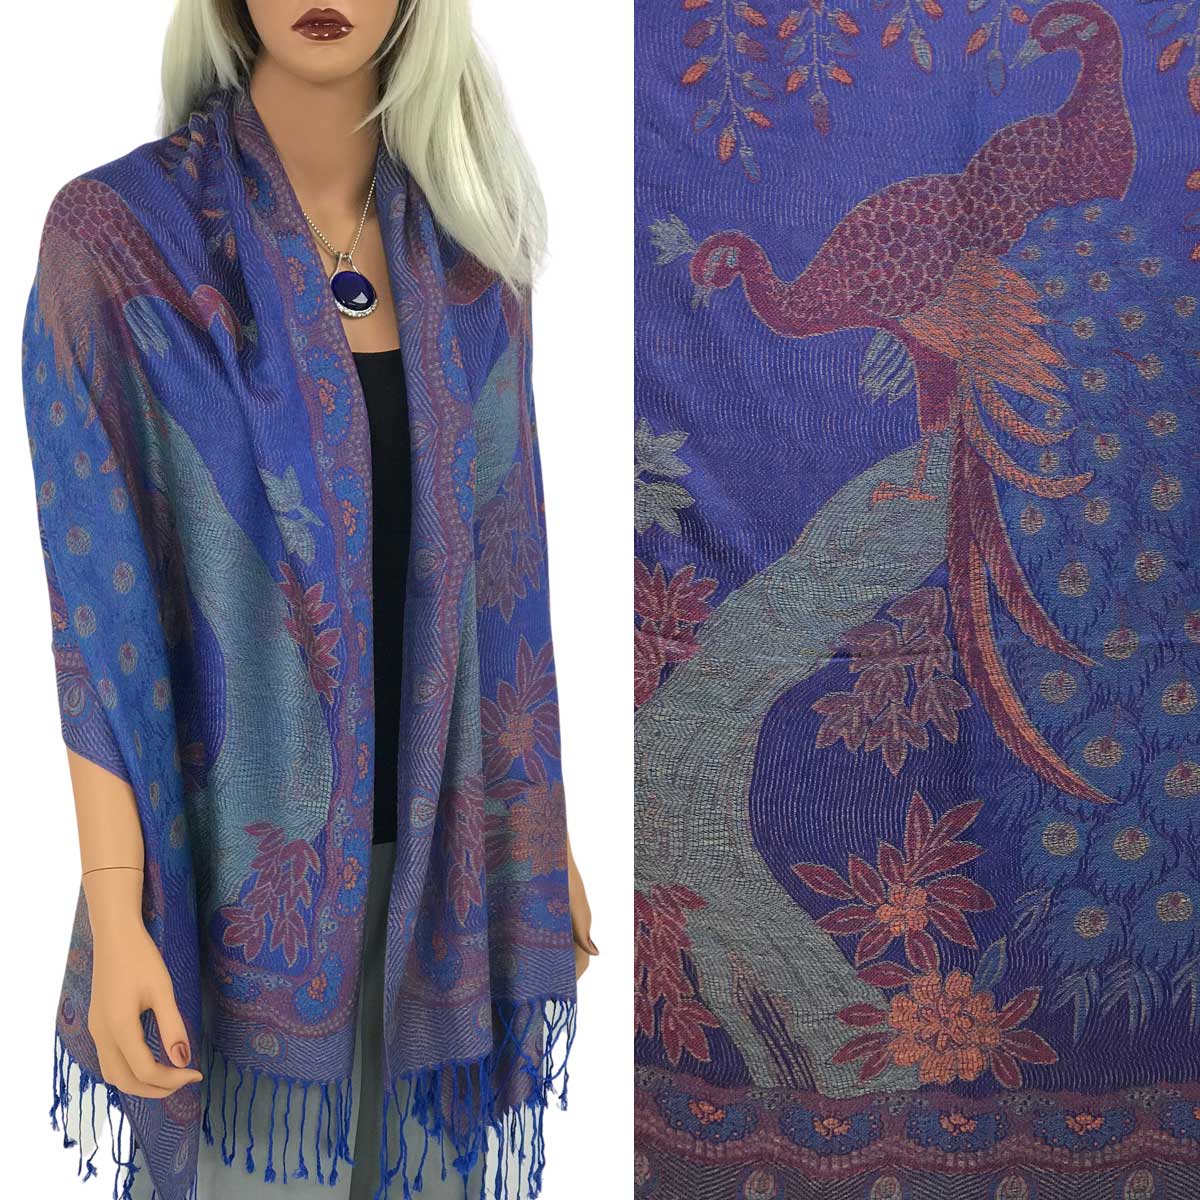 Peacock #17 Royal Blue Multi<br>
Pashmina Style Shawl